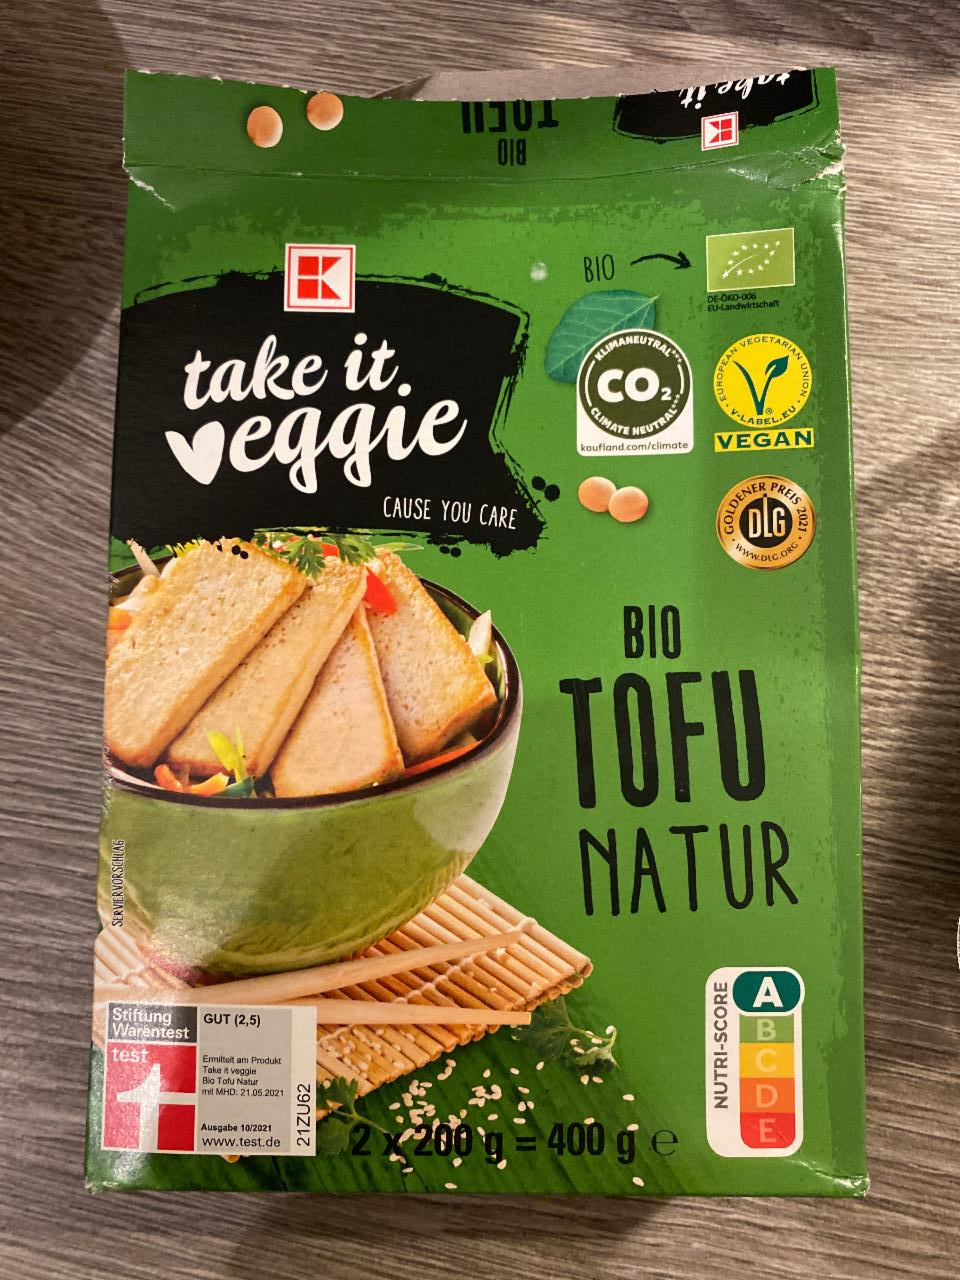 Fotografie - Bio tofu natur K-take it veggie